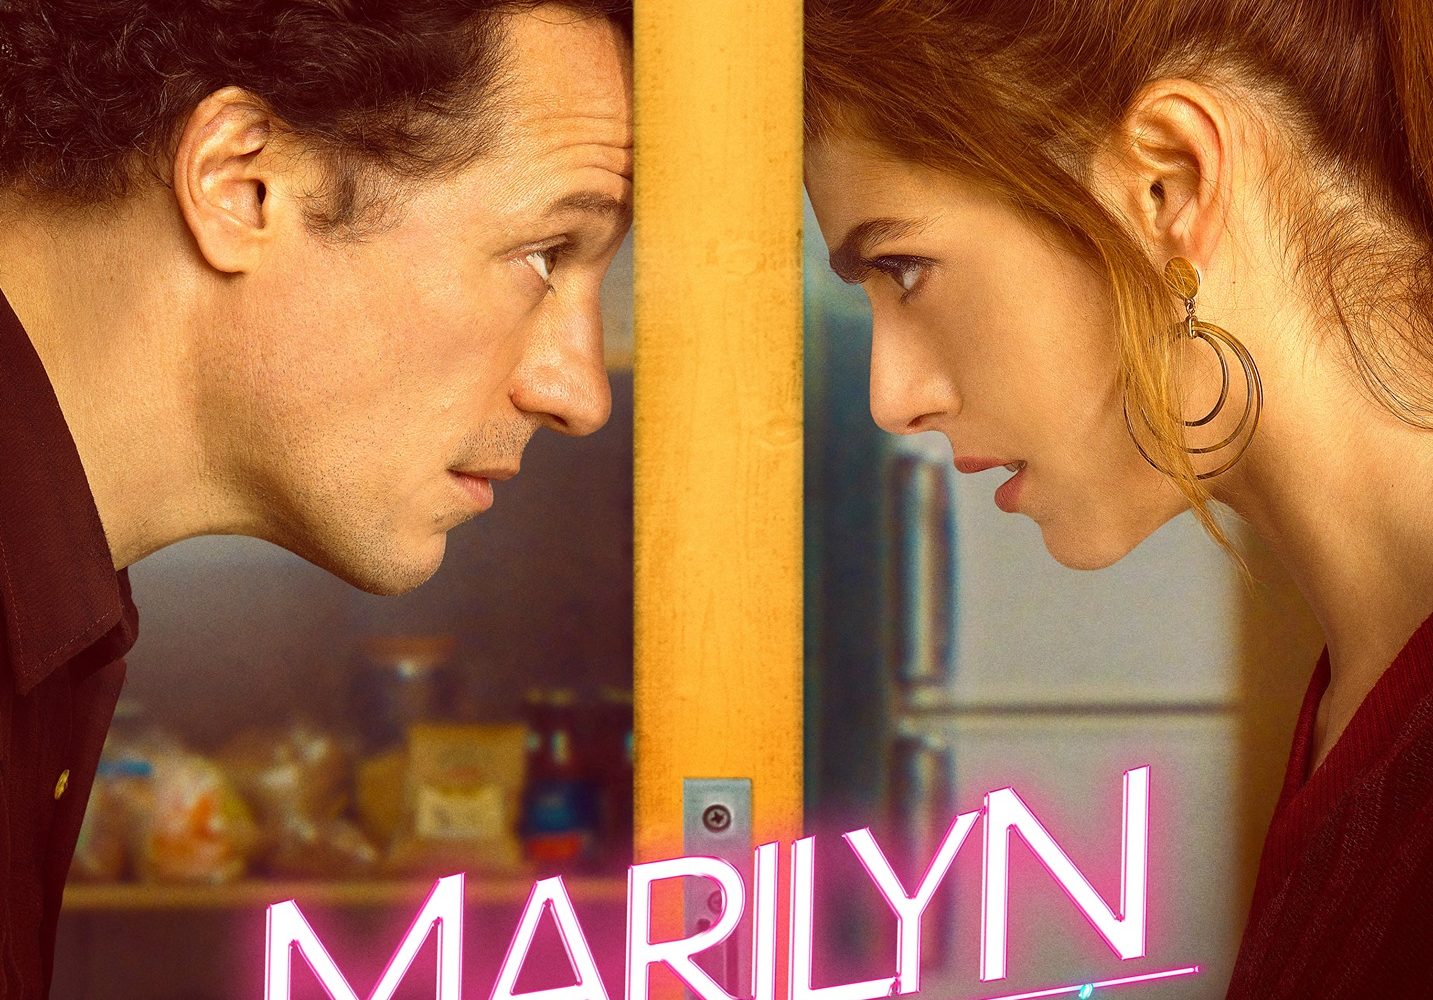 "Marylin ha gli occhi neri" arriva su Netflix e Sky